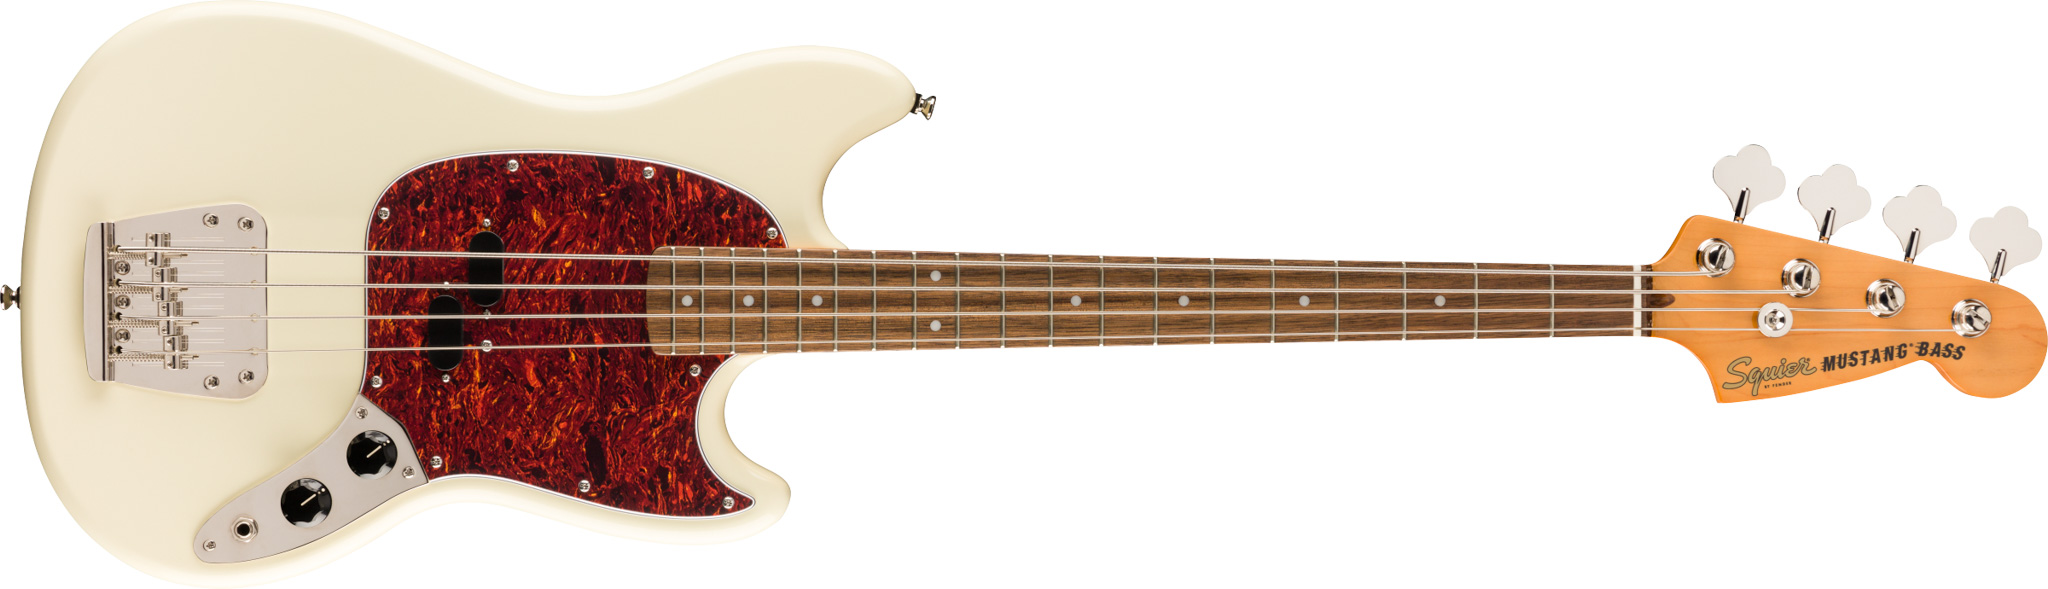 Fender Squier Classic Vibe '60s Mustang elektrisk bass